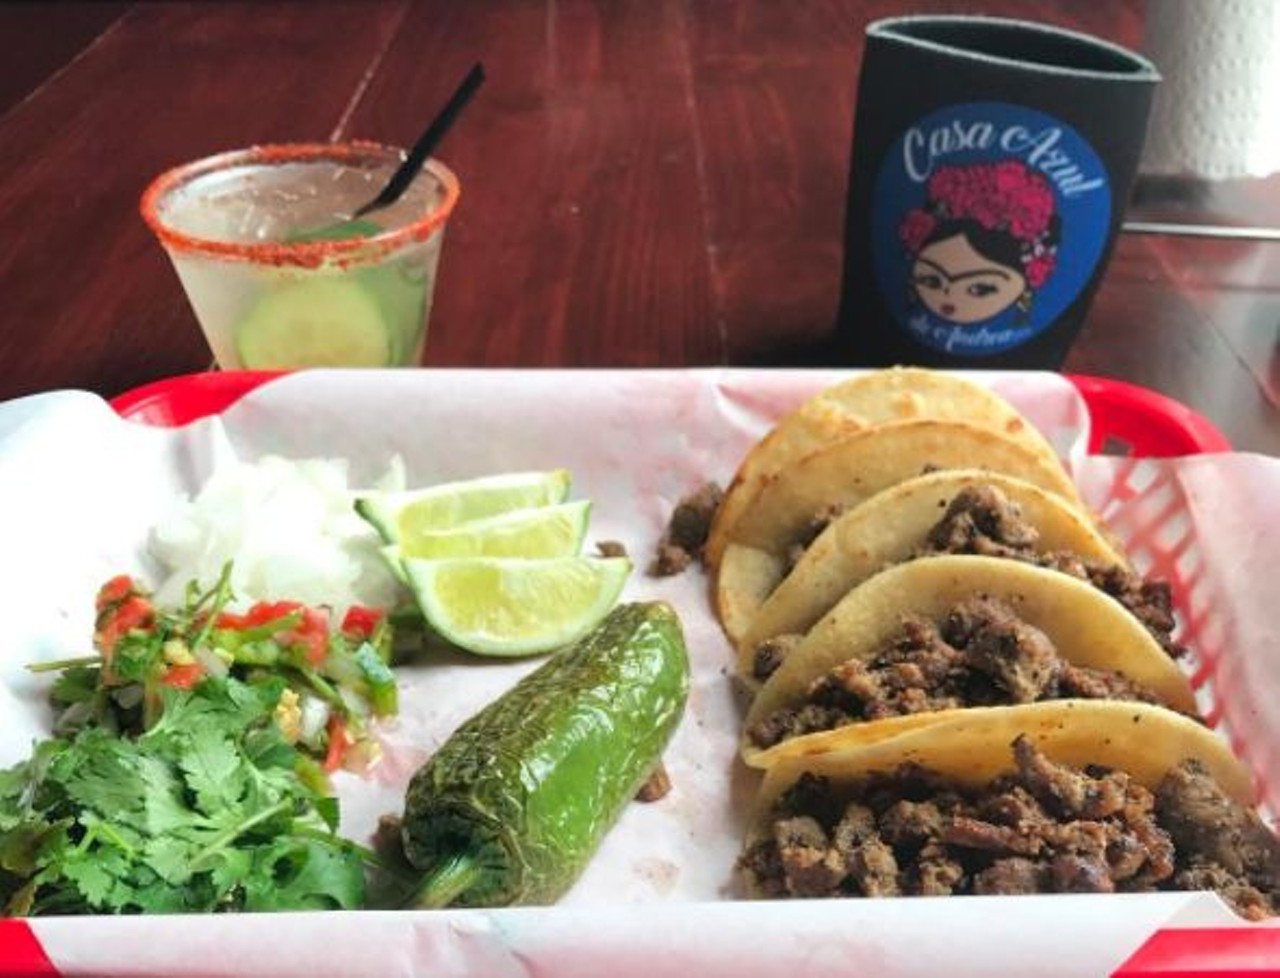 Casa Azul de Andrea
1036 S. Alamo, (210) 451-9393
What better place to eat tacos than in the casita/restaurant dedicated to Frida Kahlo?
Photo via Instagram, lisa.22rn